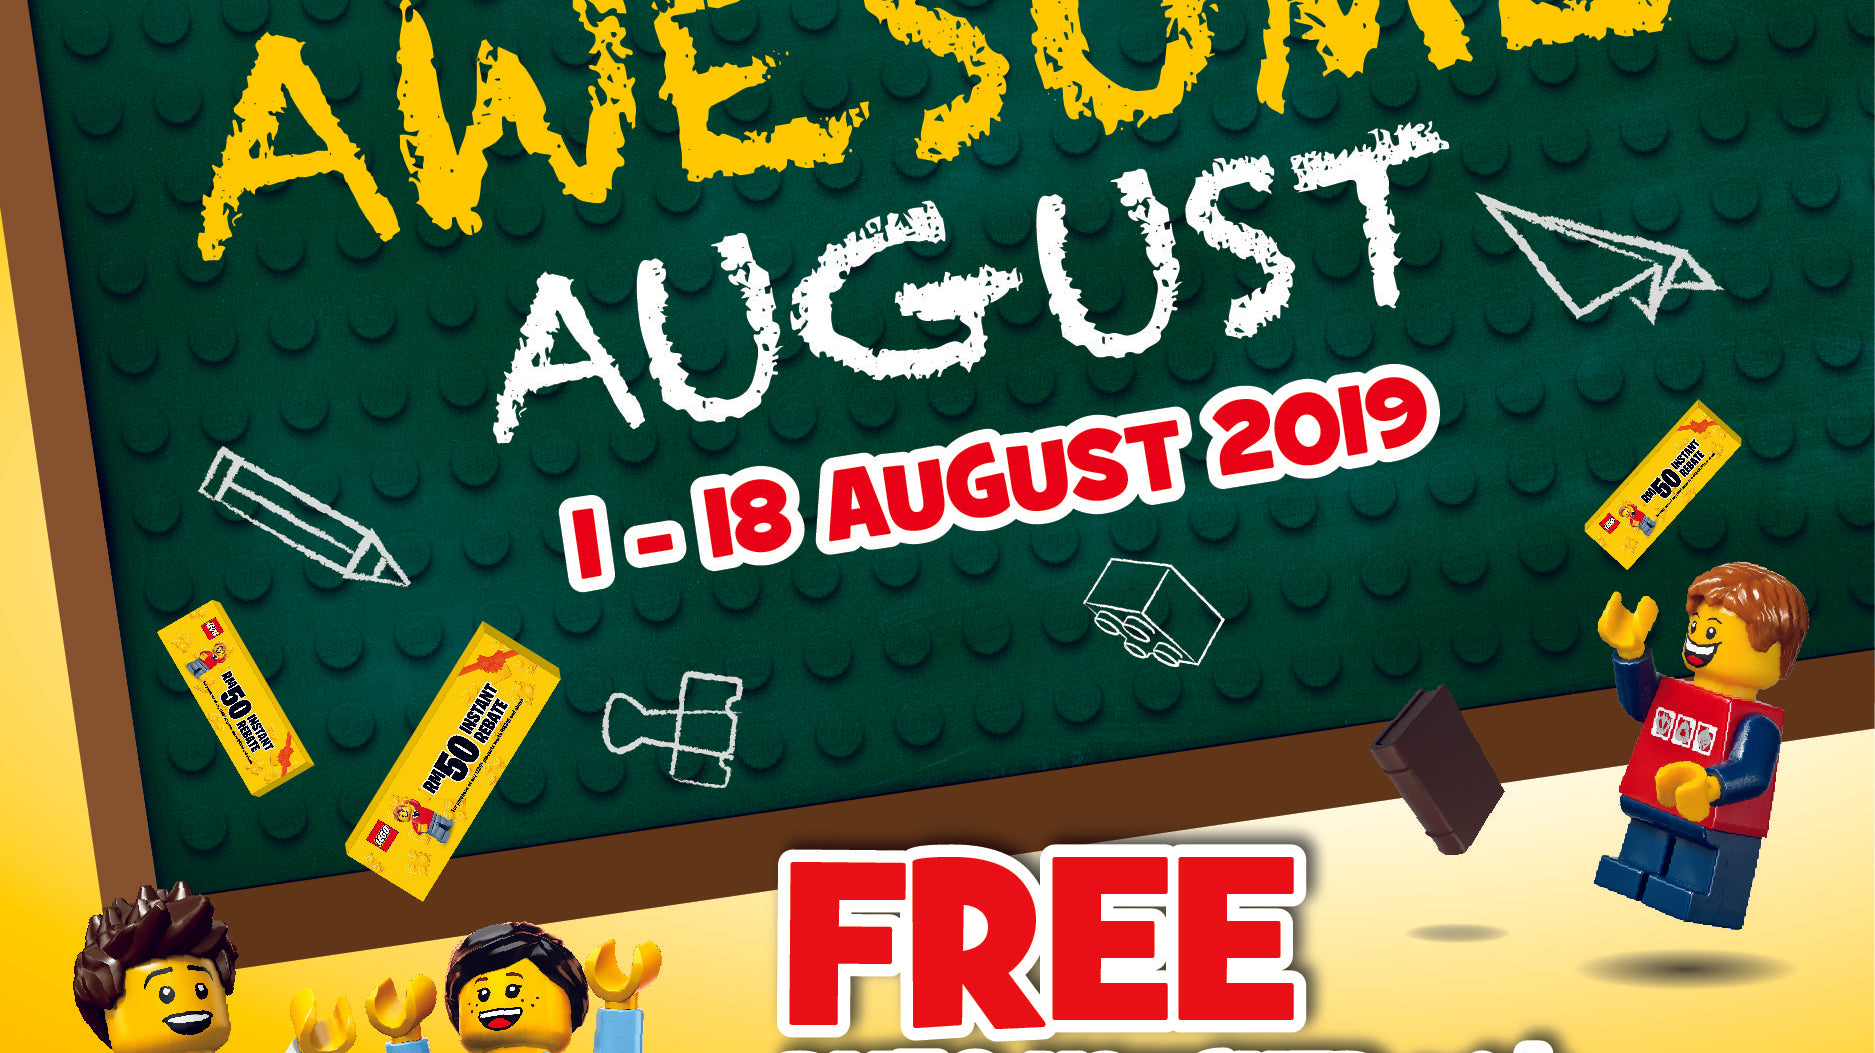 LEGO School Holiday Promotion